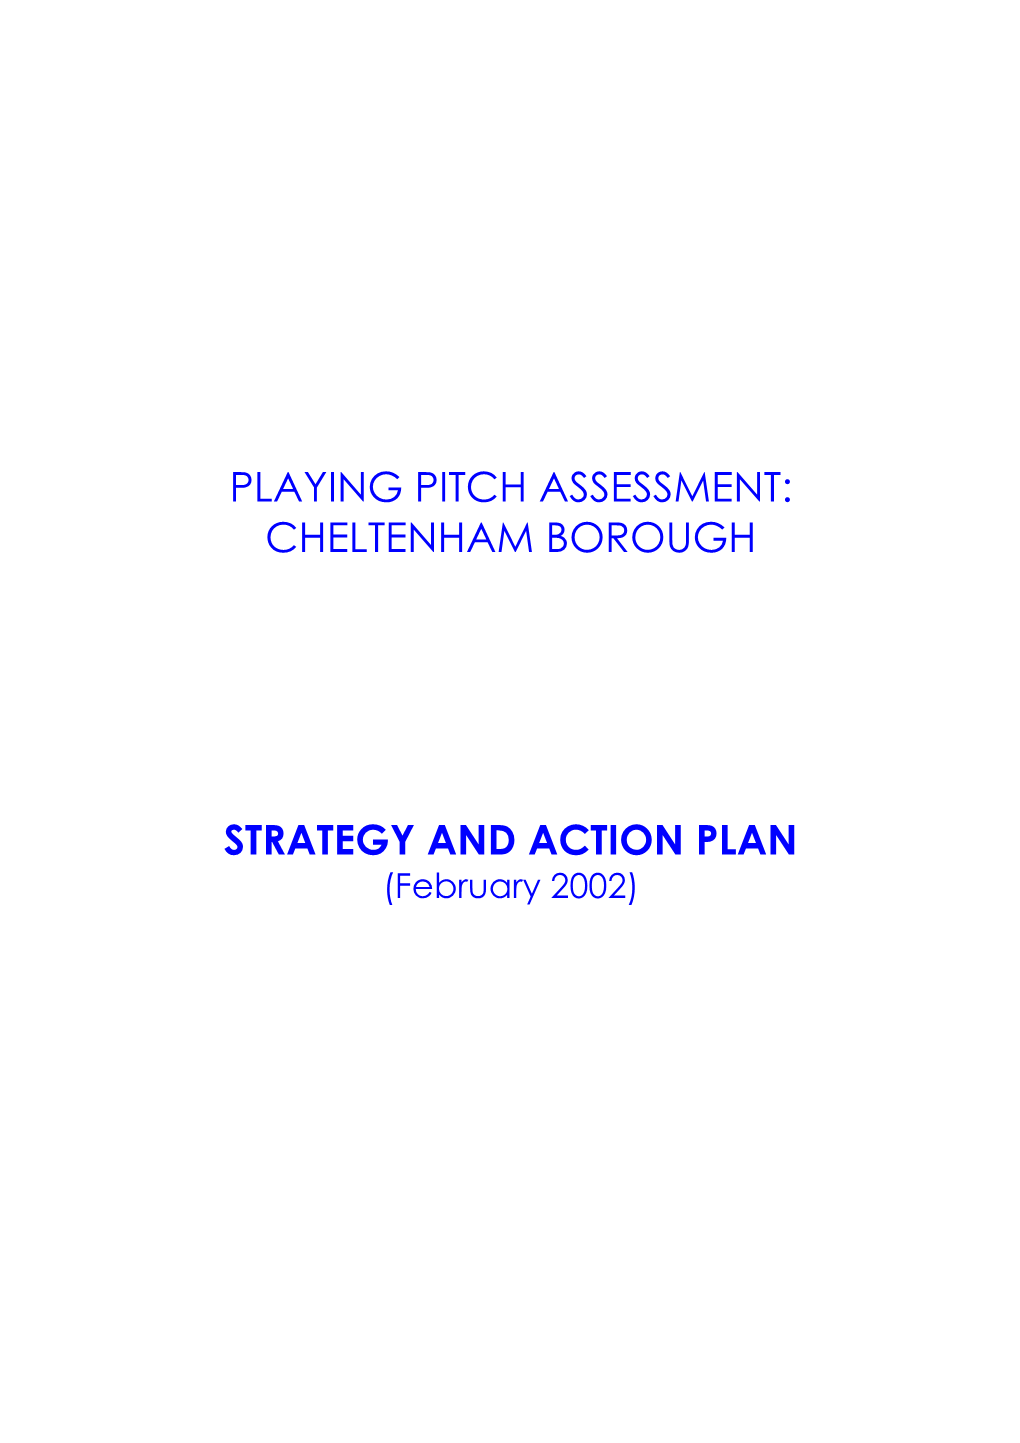 Playing Pitch Assessment: Cheltenham Borough